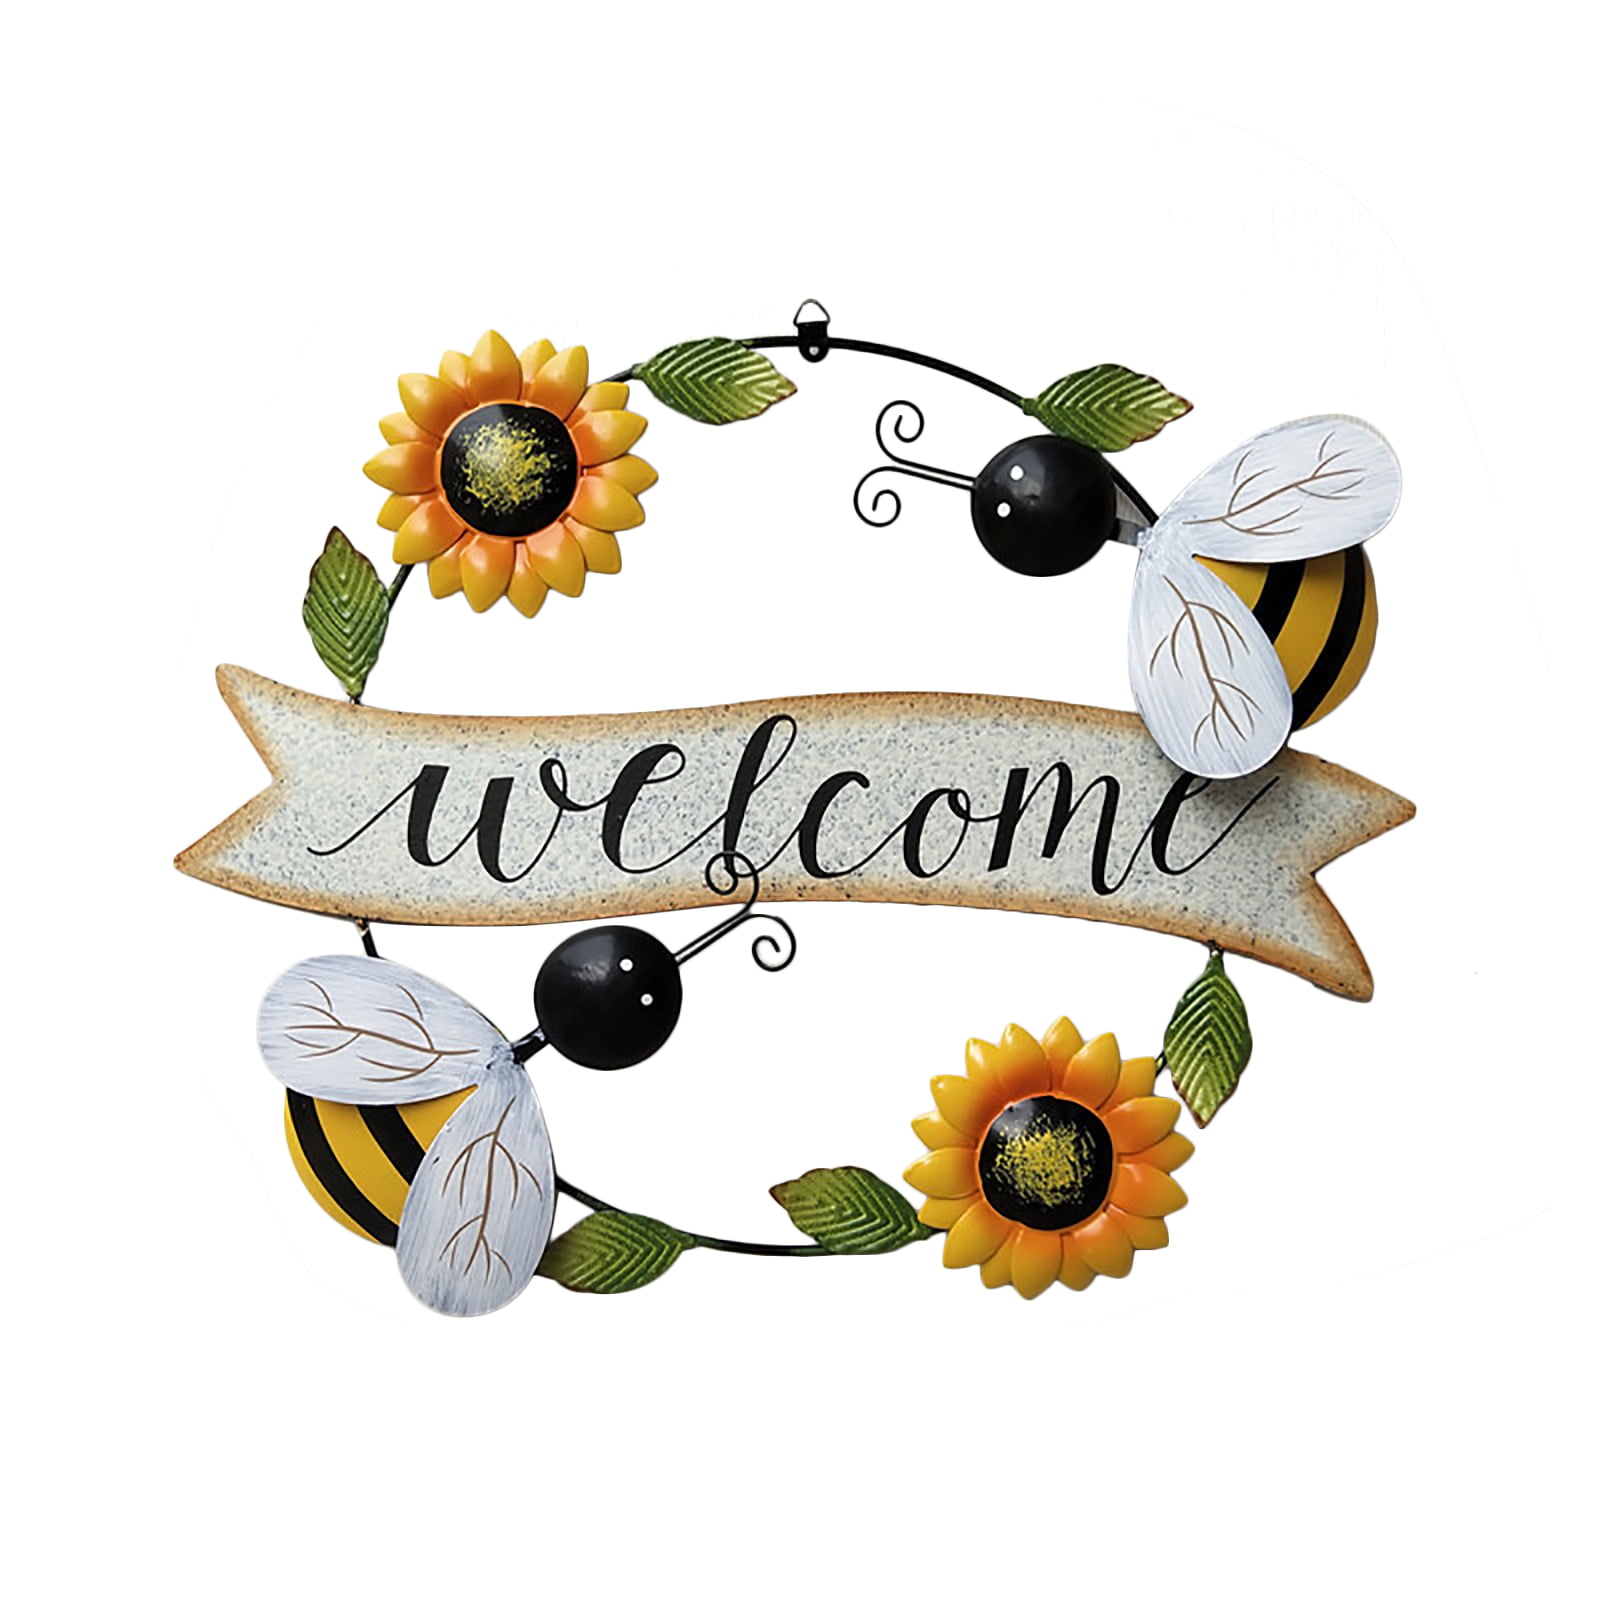 Sunflower Welcome Sign Decorative Vintage Metal Wall Hanging Home Garden Decor Welcome Plaque for Front Door Garden 